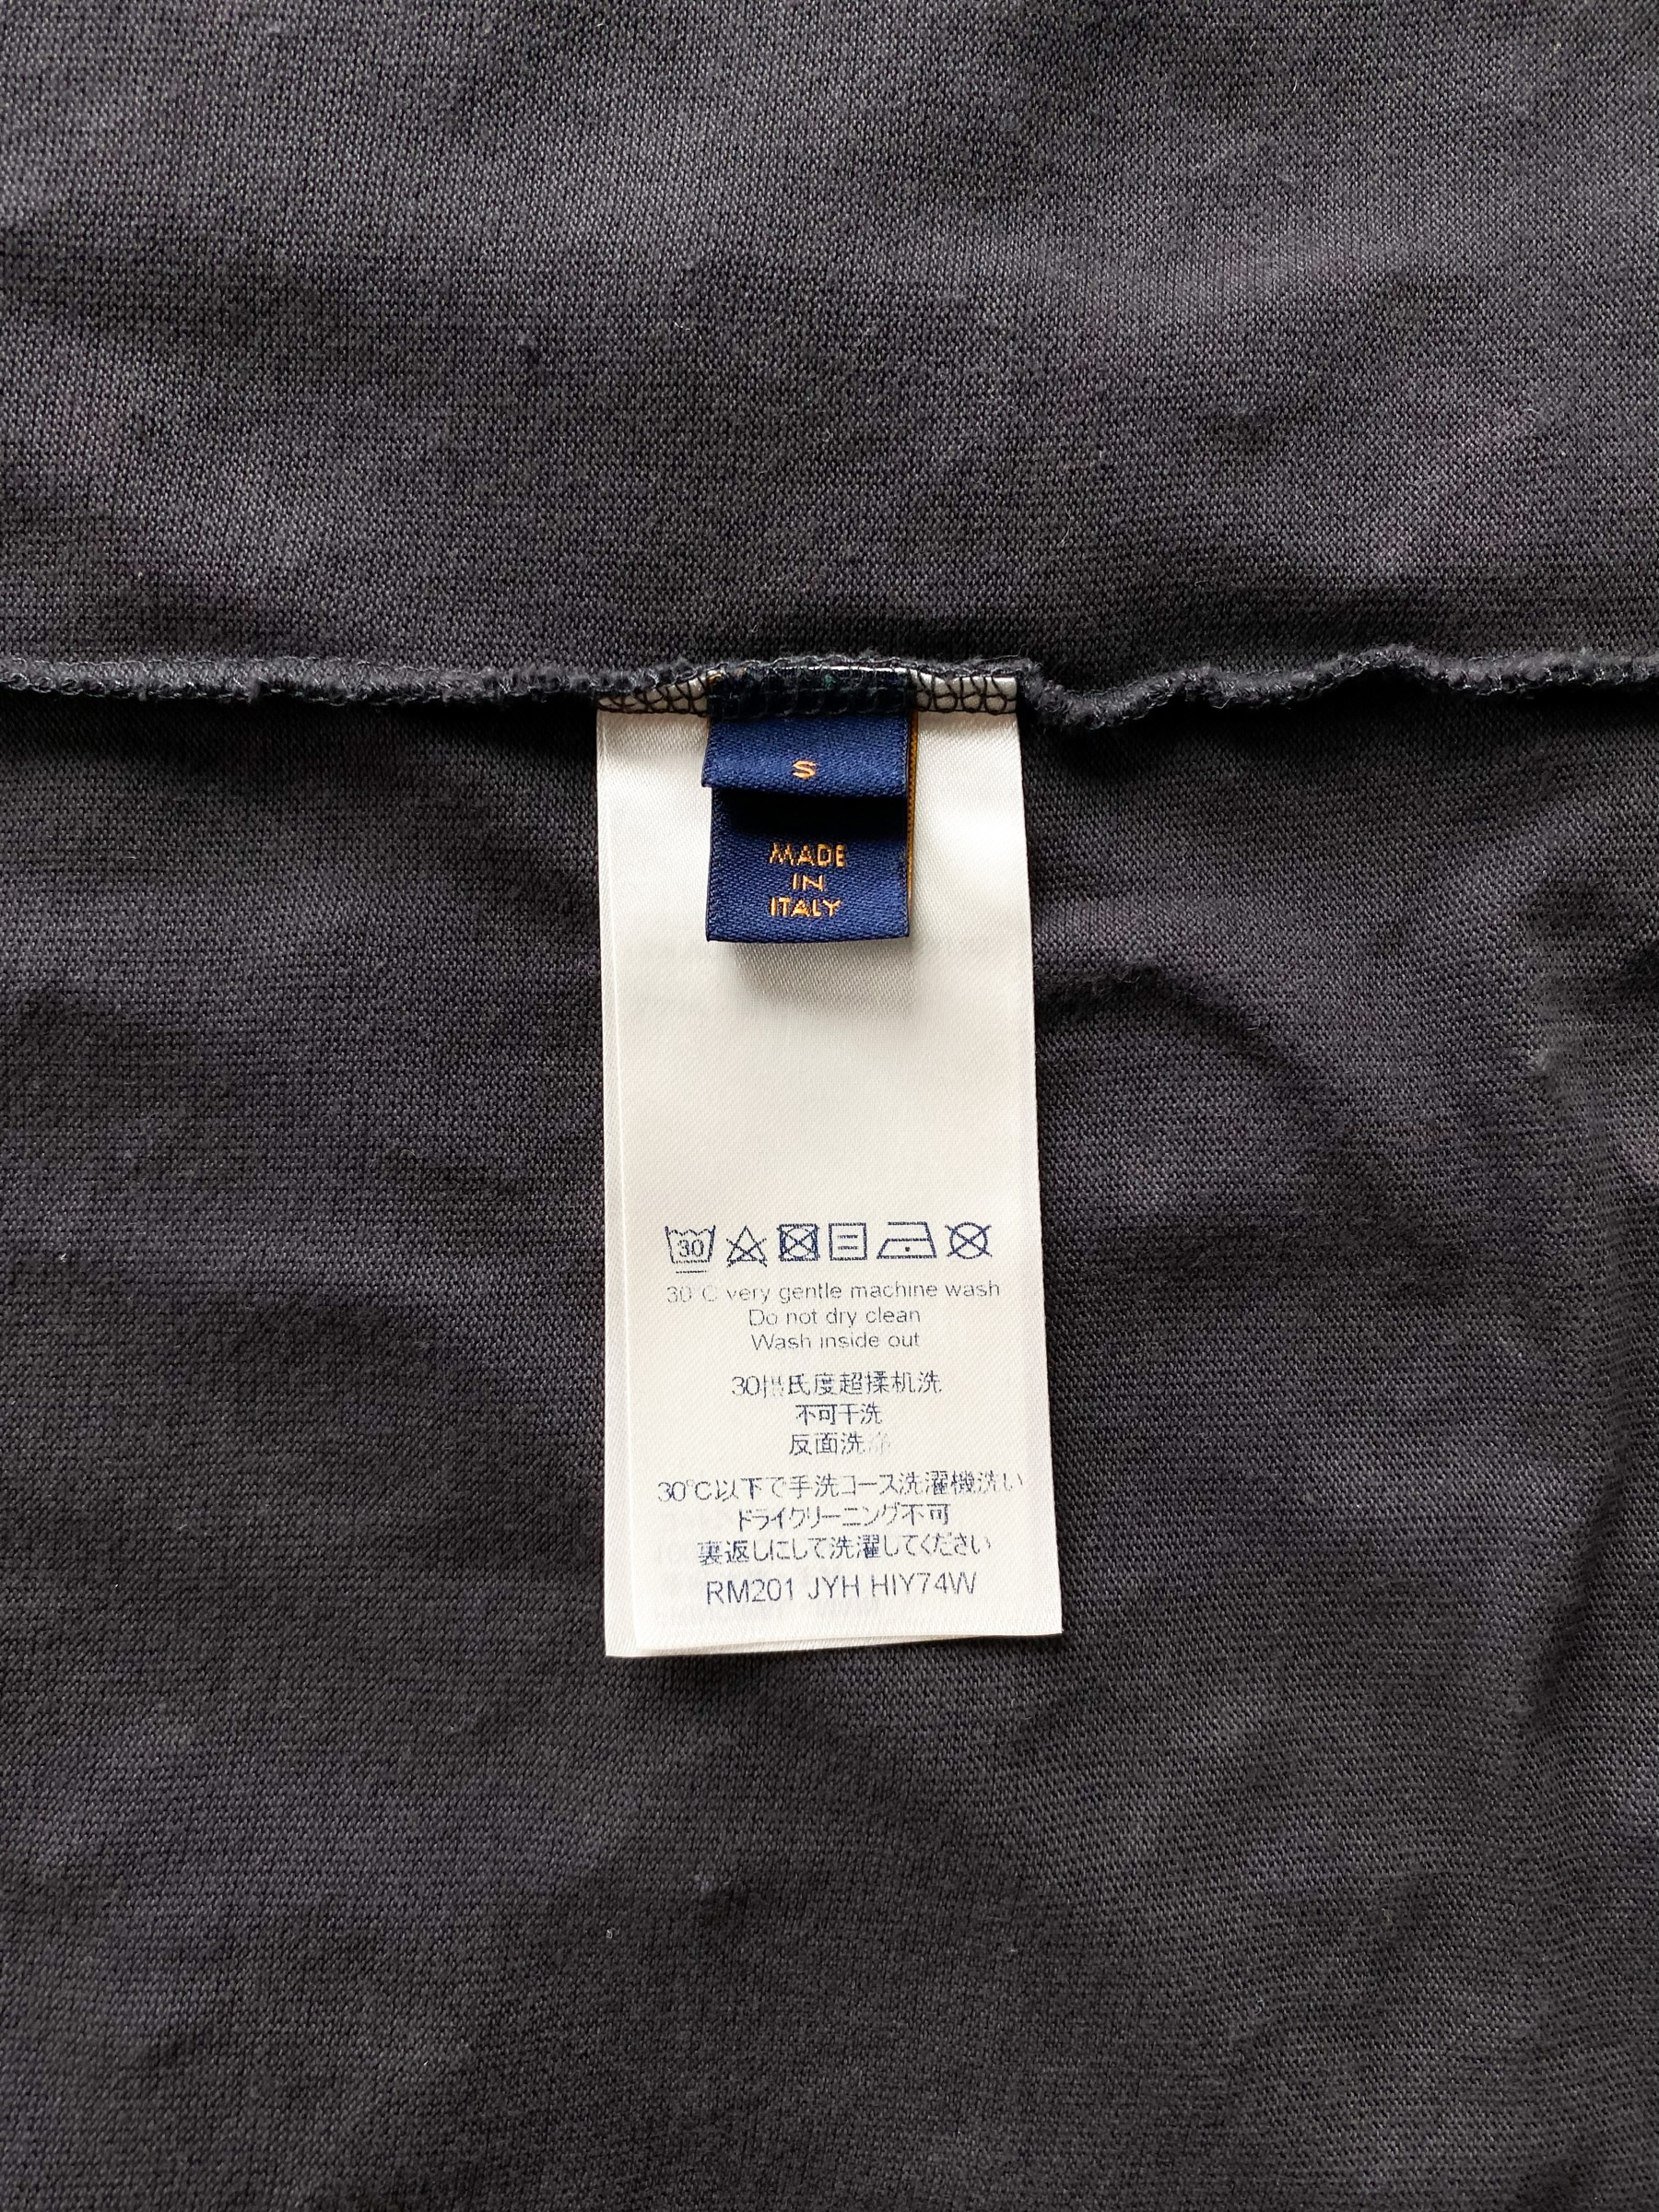 Louis Vuitton Orange Logo Monogram Combine Grey Checkerboard On Sleeves And  Collar Polo Shirt - Tagotee